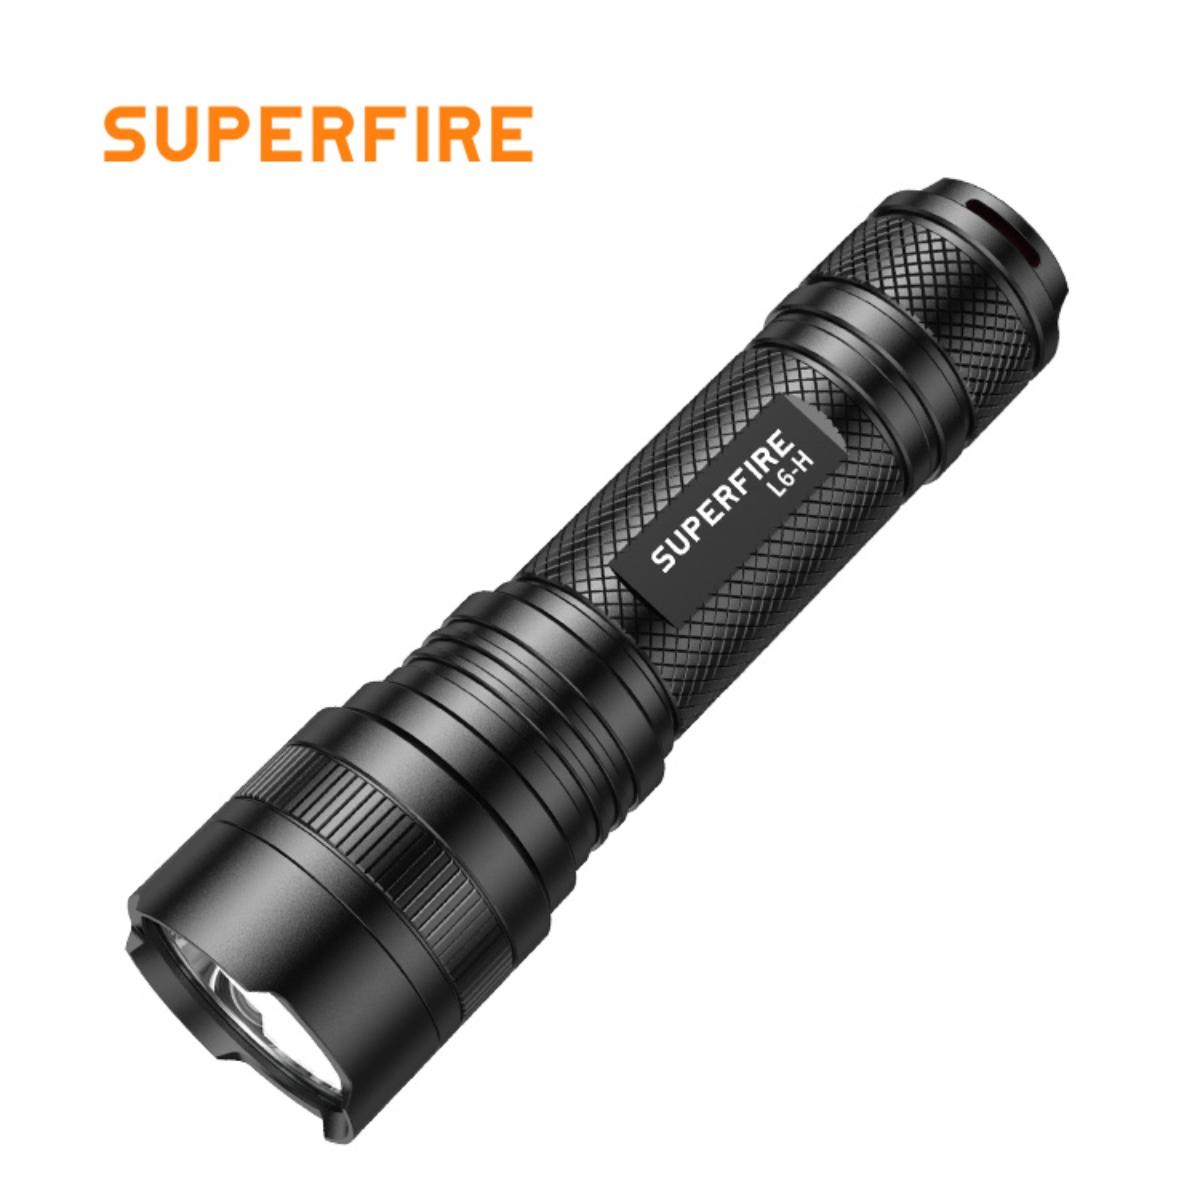 SUPERFIRE L6-H tactical flashlight